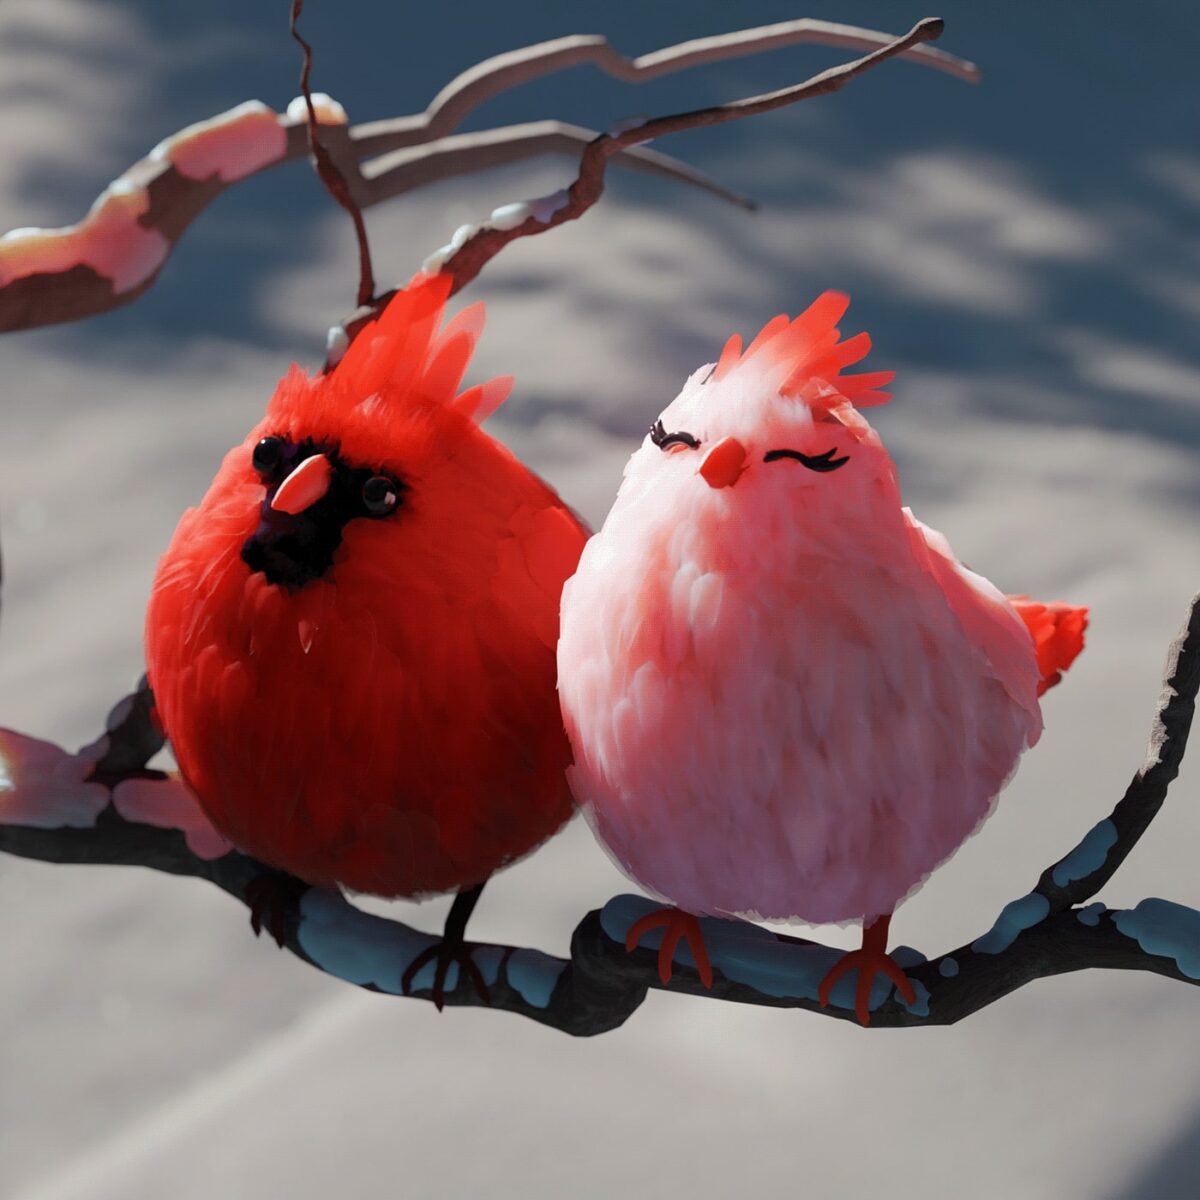 Fat Birds An Amusing 3d Illustration Series By Marcus Penna (4)